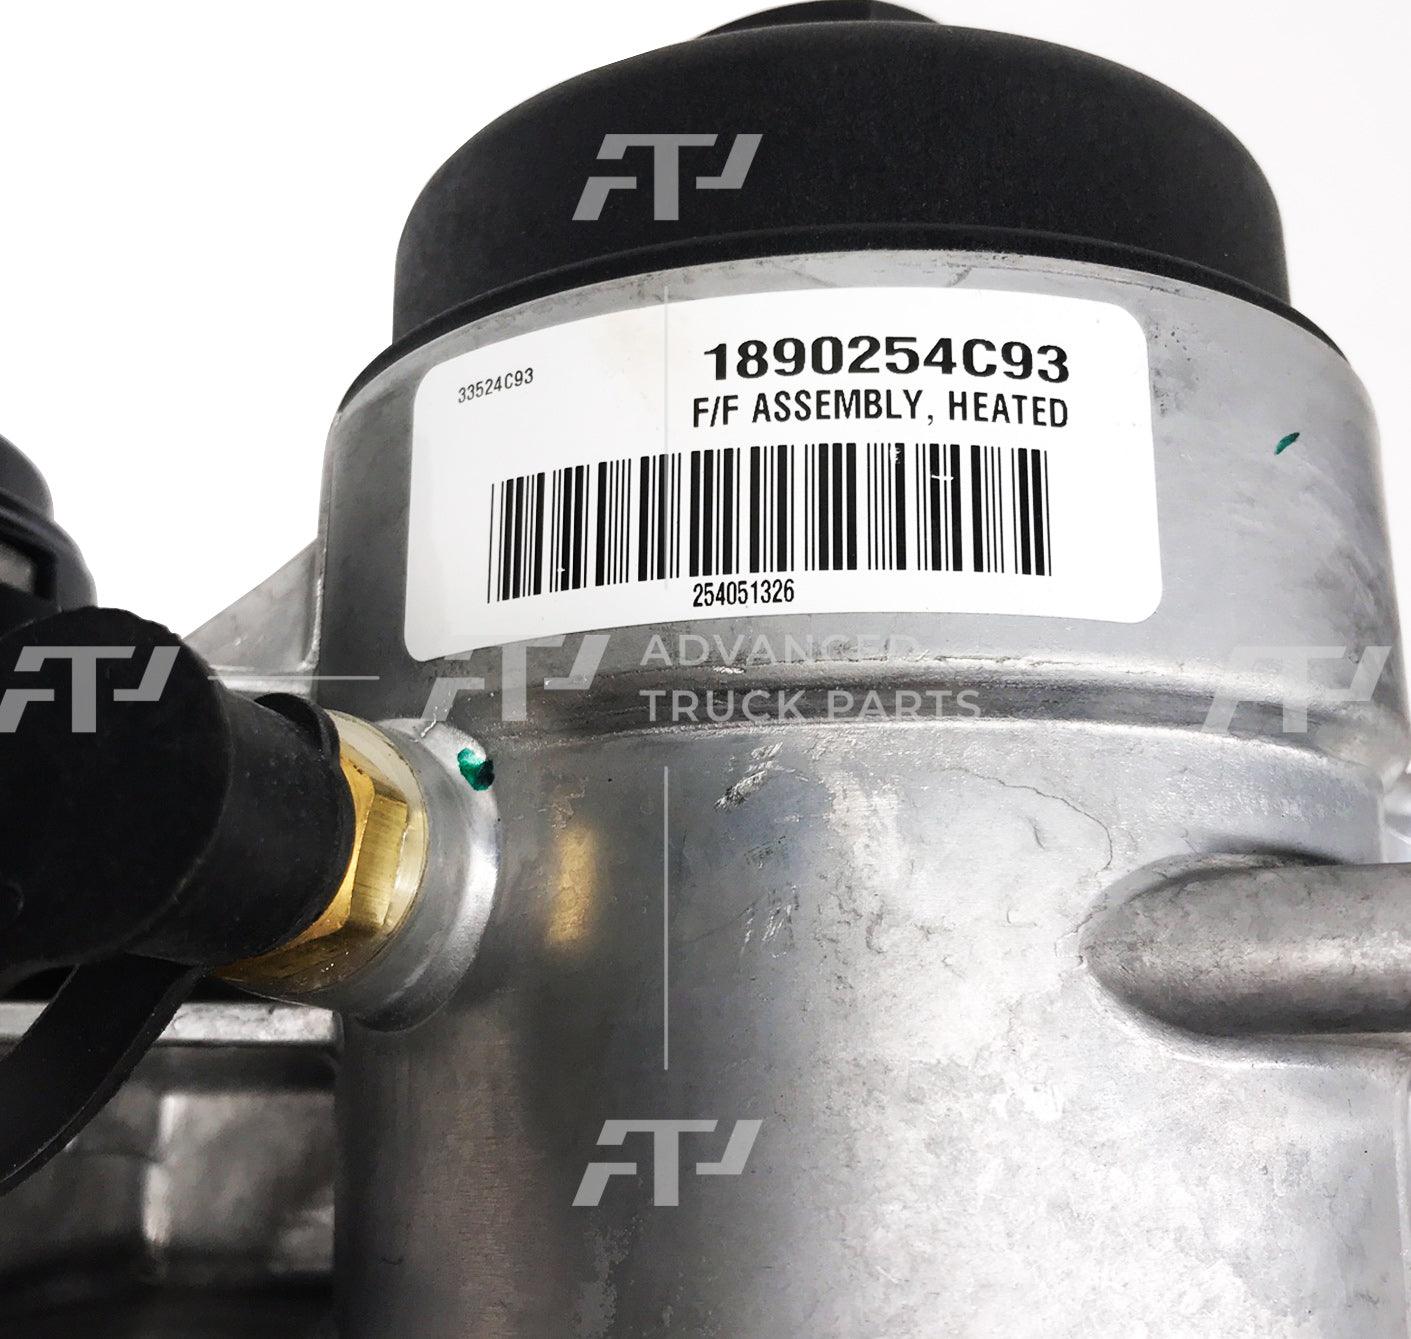 1890254C93 Genuine International Header Assy Fuel Filter With Heater - ADVANCED TRUCK PARTS